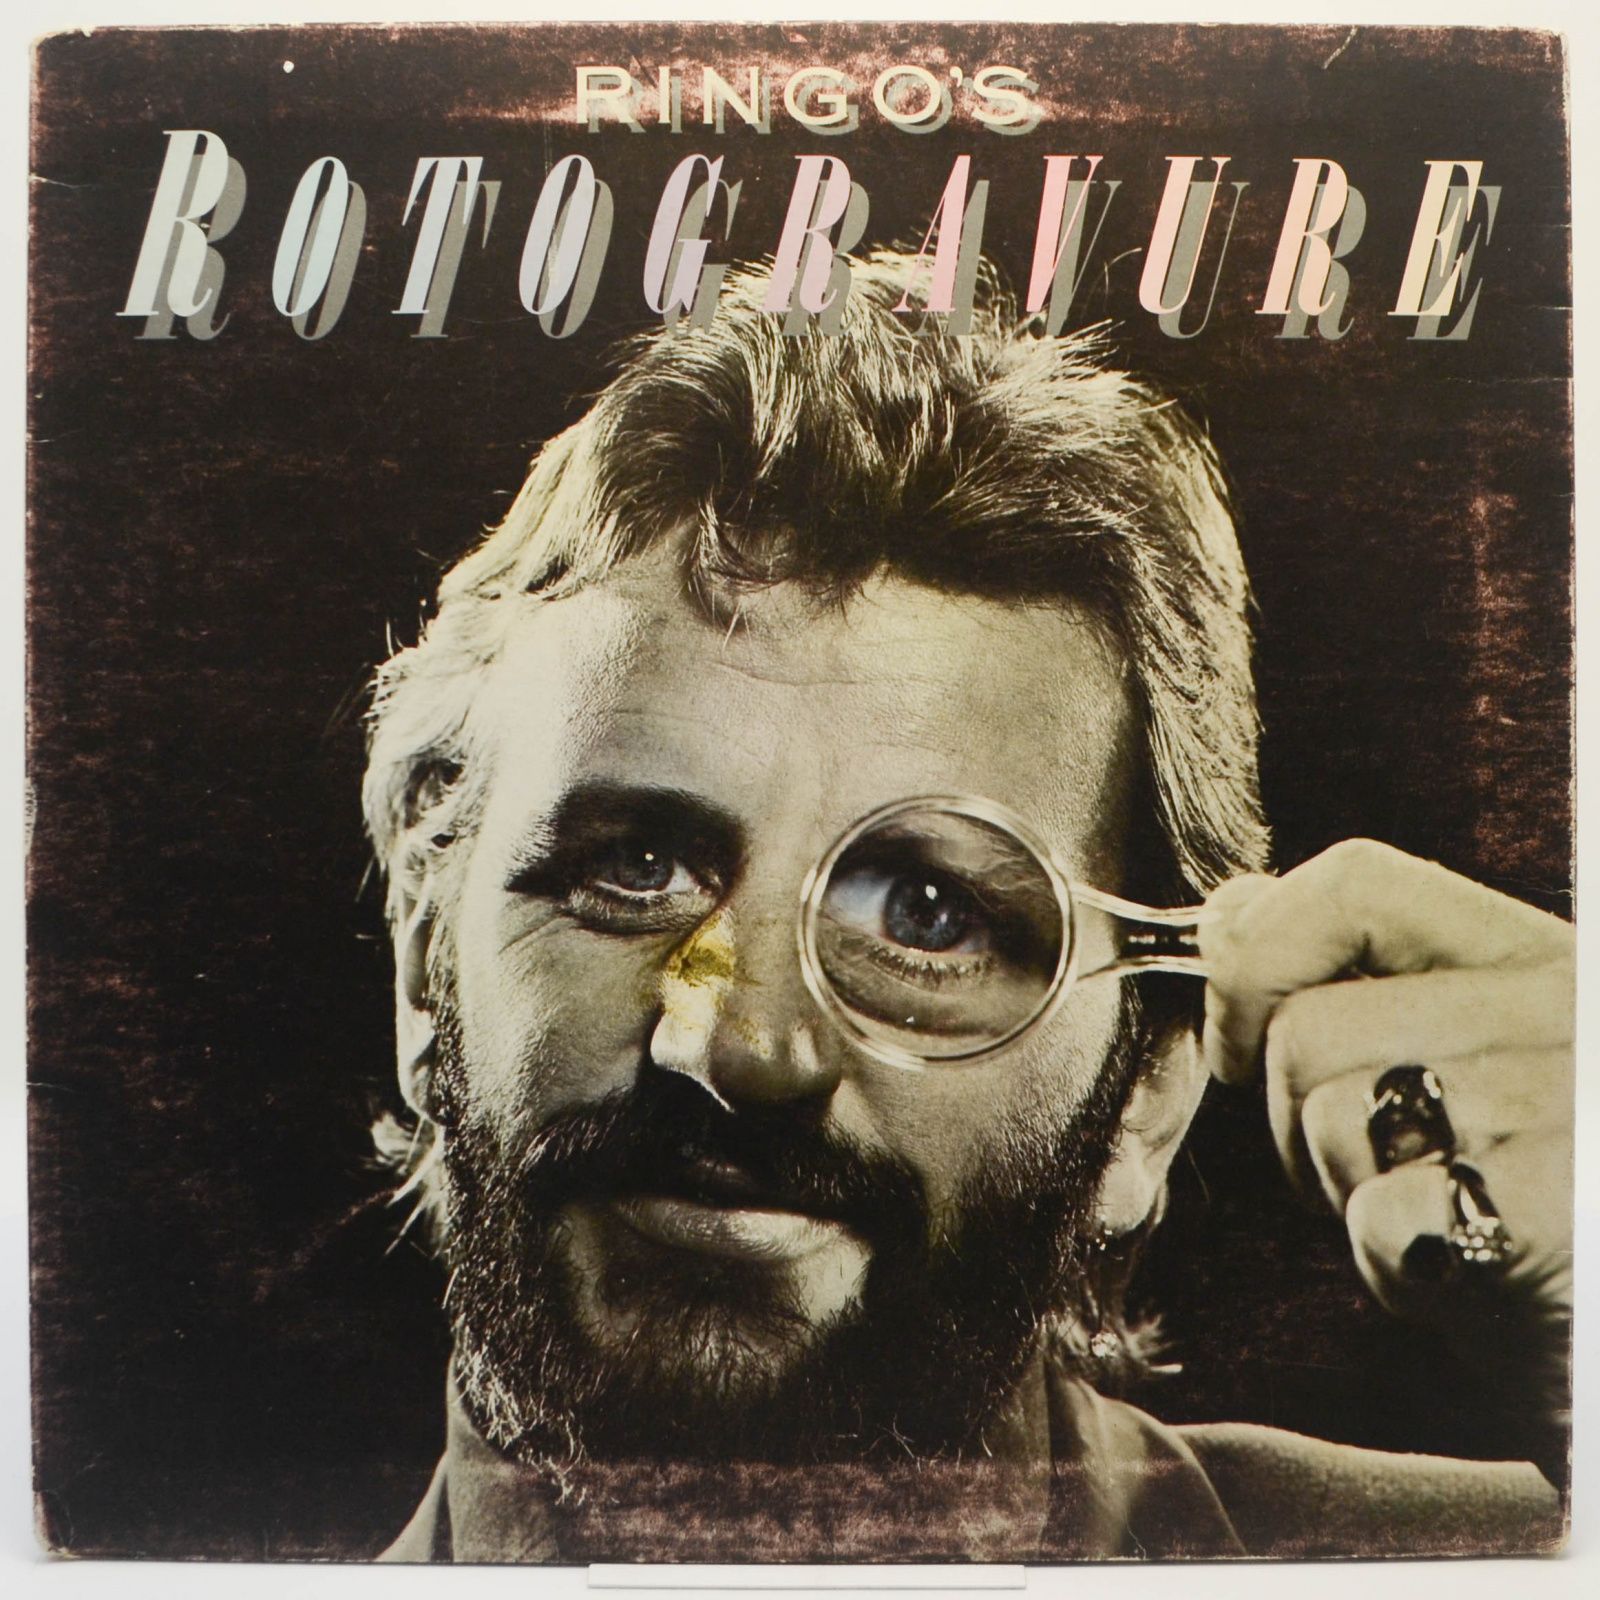 Ringo Starr — Ringo's Rotogravure, 1976